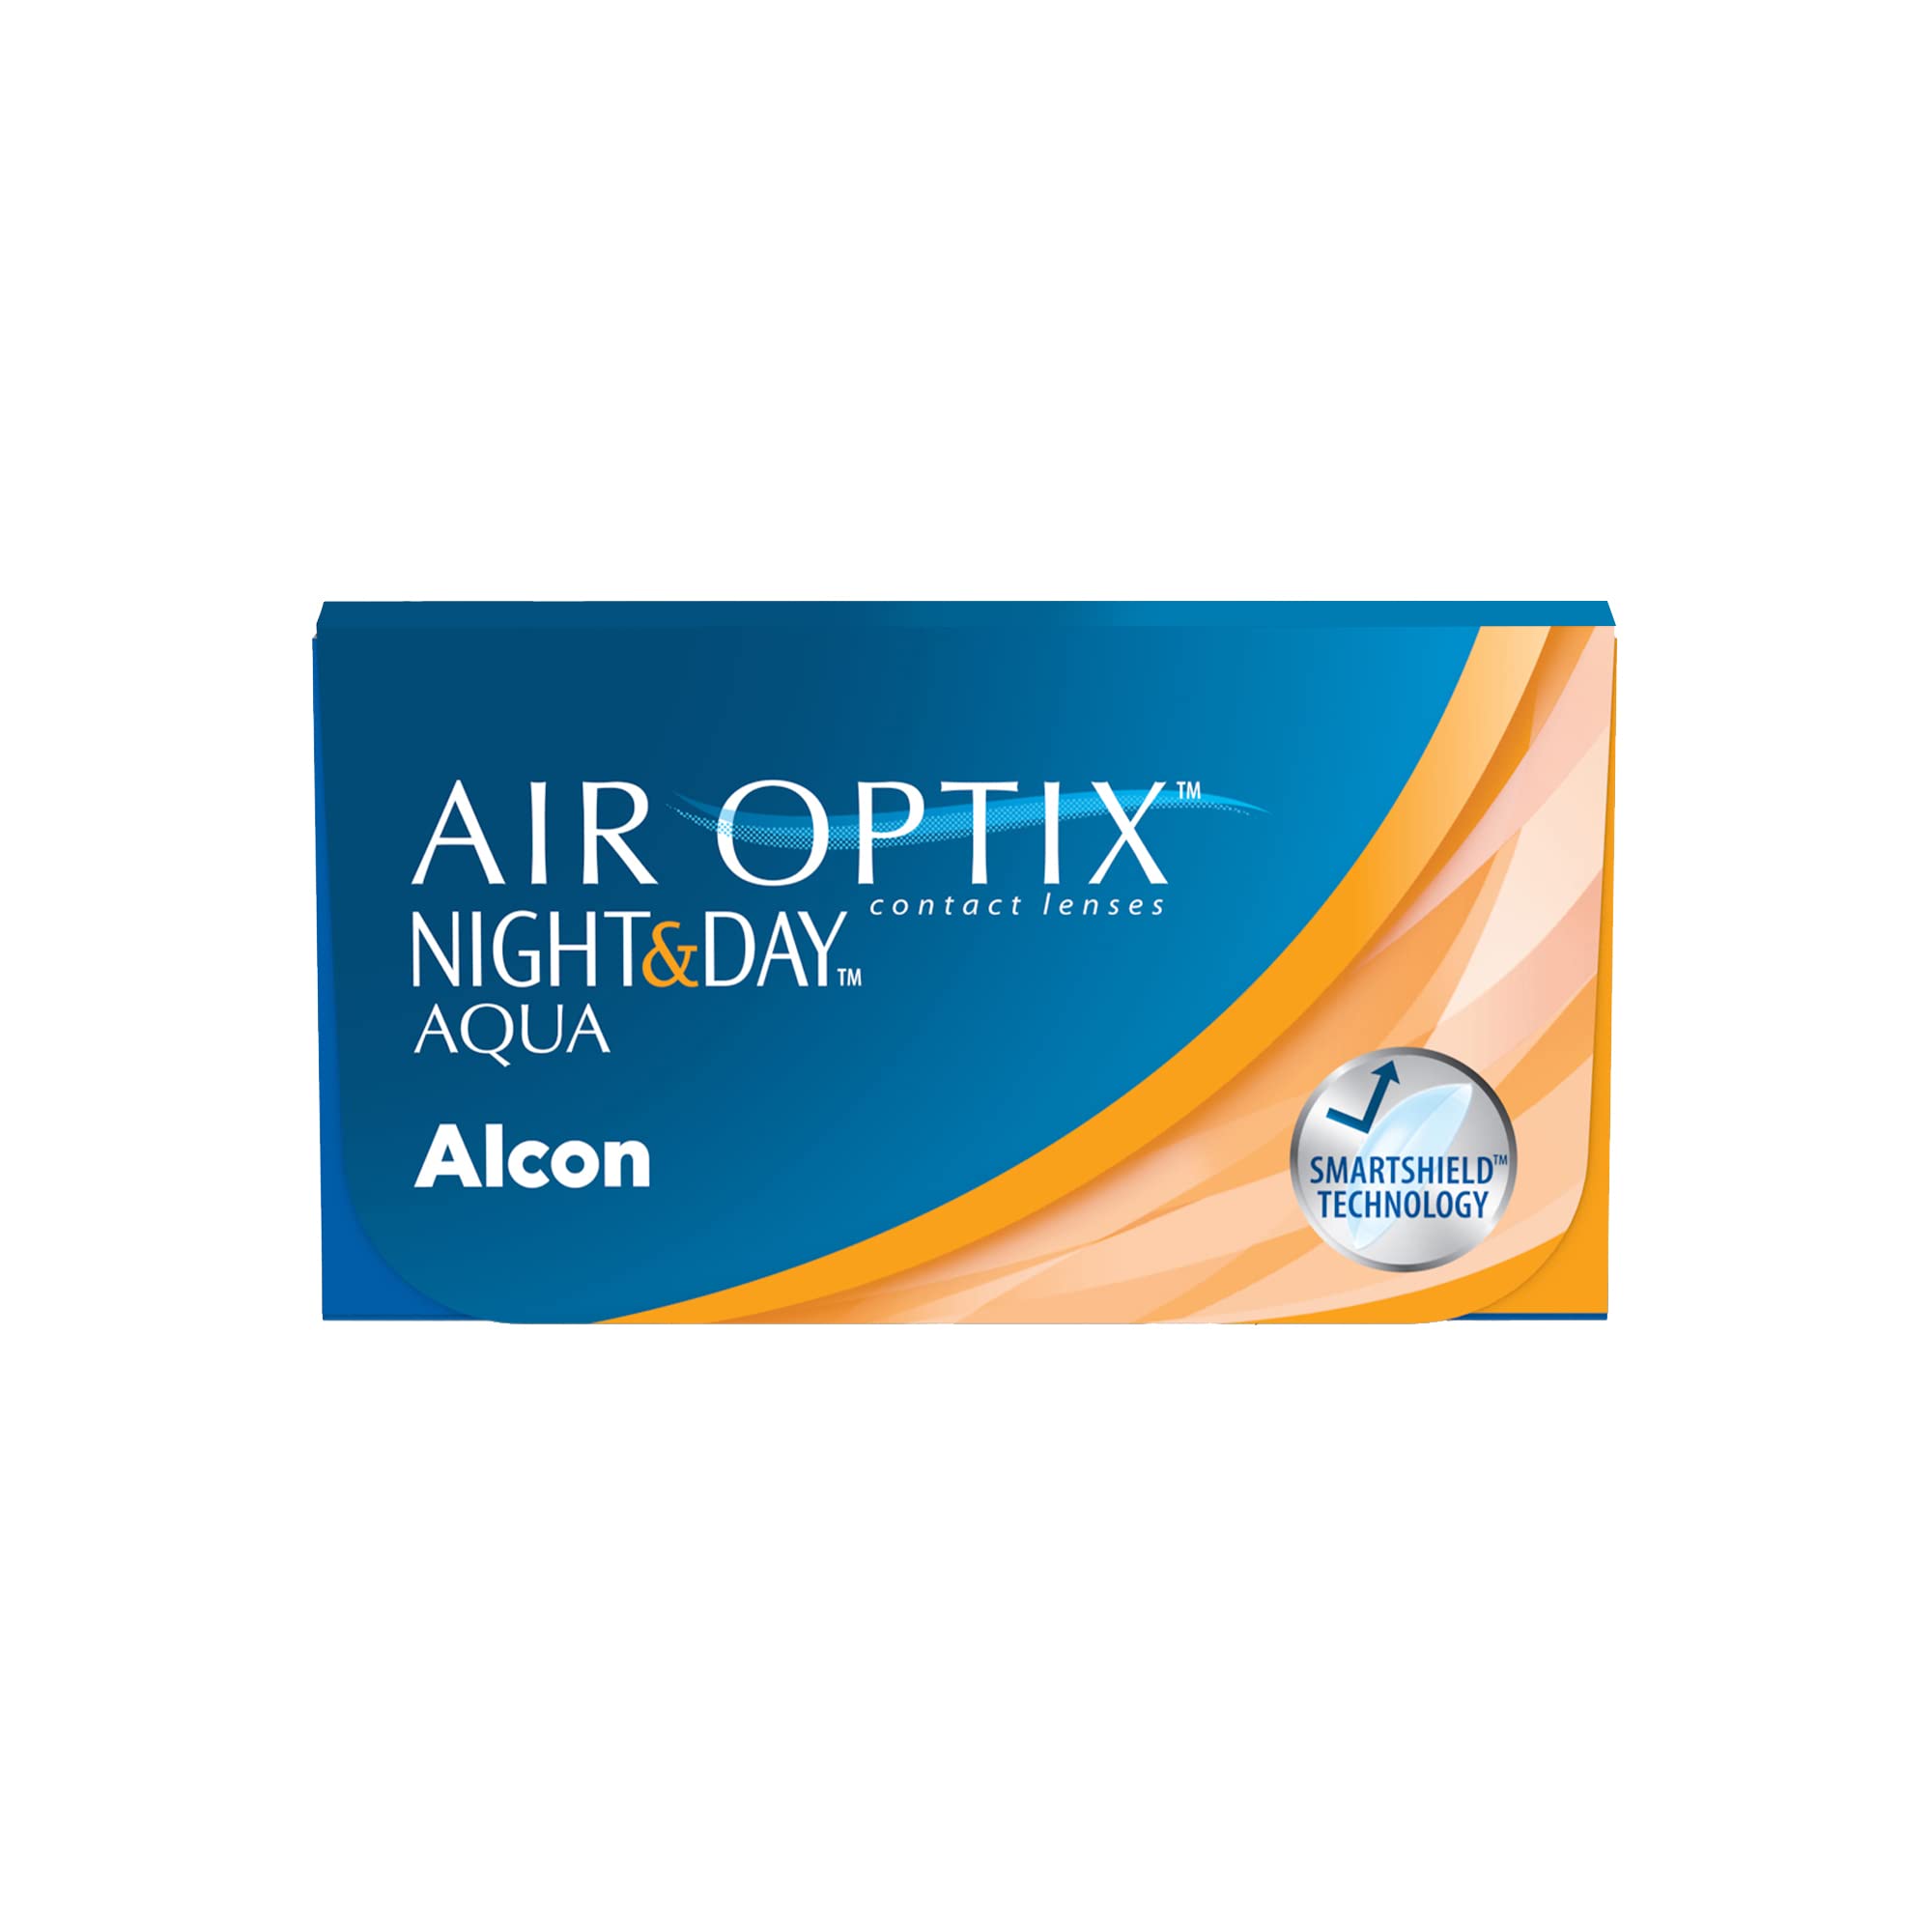 Air Optix Night & Day Aqua Monatslinsen weich, 6 Stück, BC 8.4 mm, DIA 13.8 mm, +2.25 Dioptrien